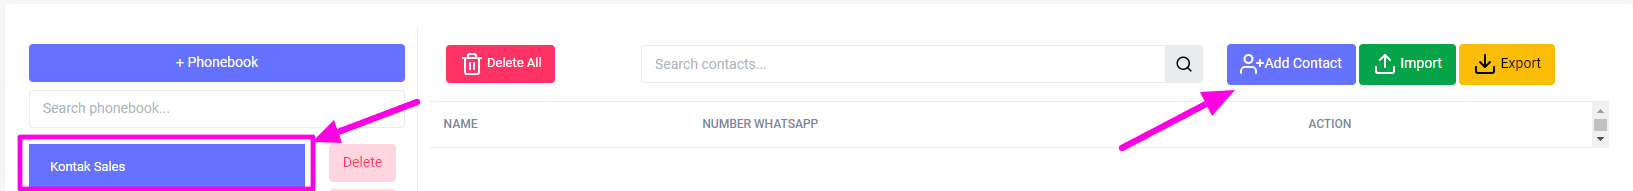 tambah daftar kontak whatsapp gateway